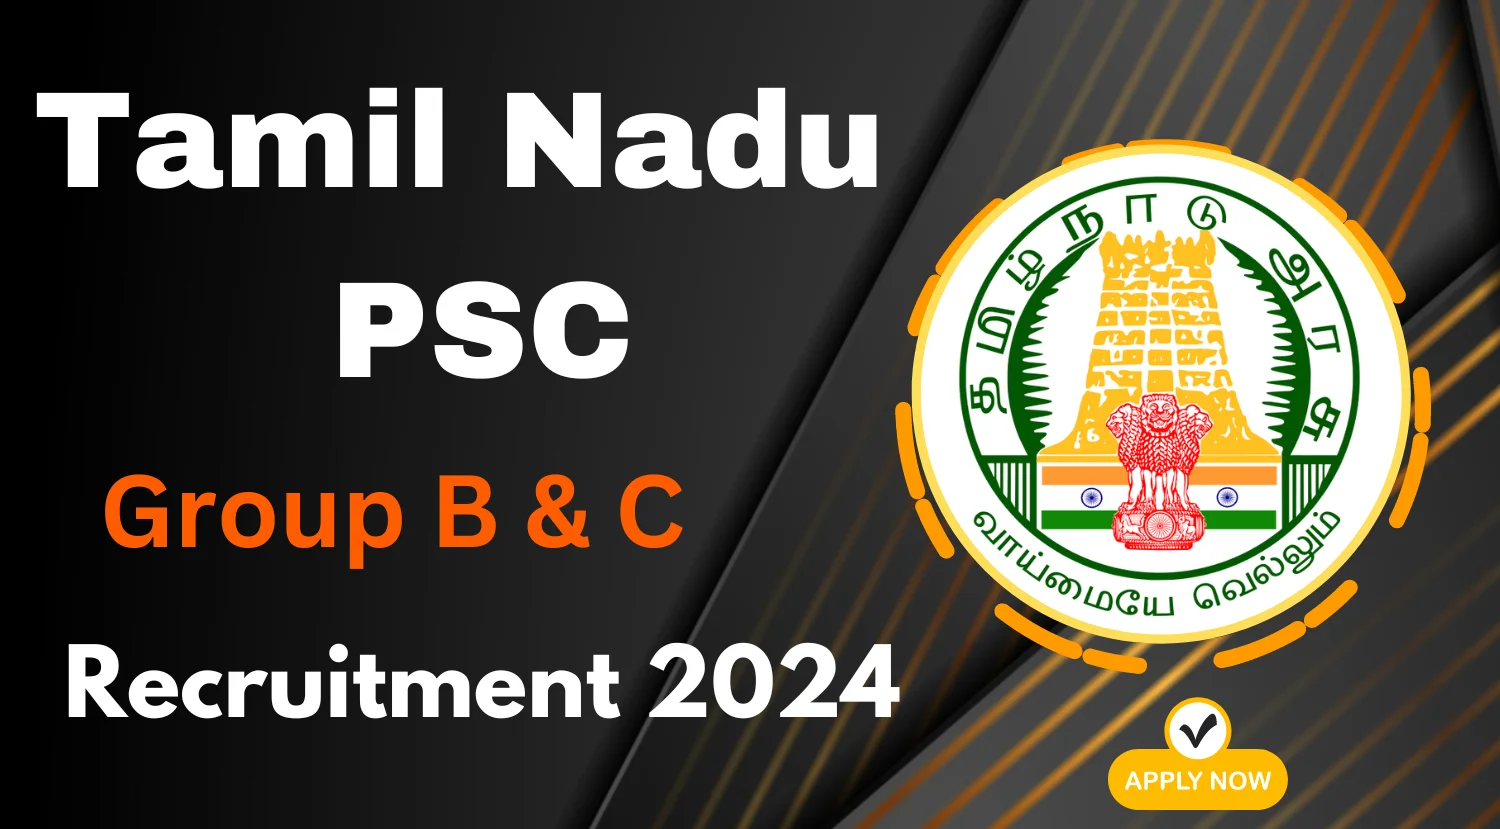 TNPSC Civil Services Recruitment 2024